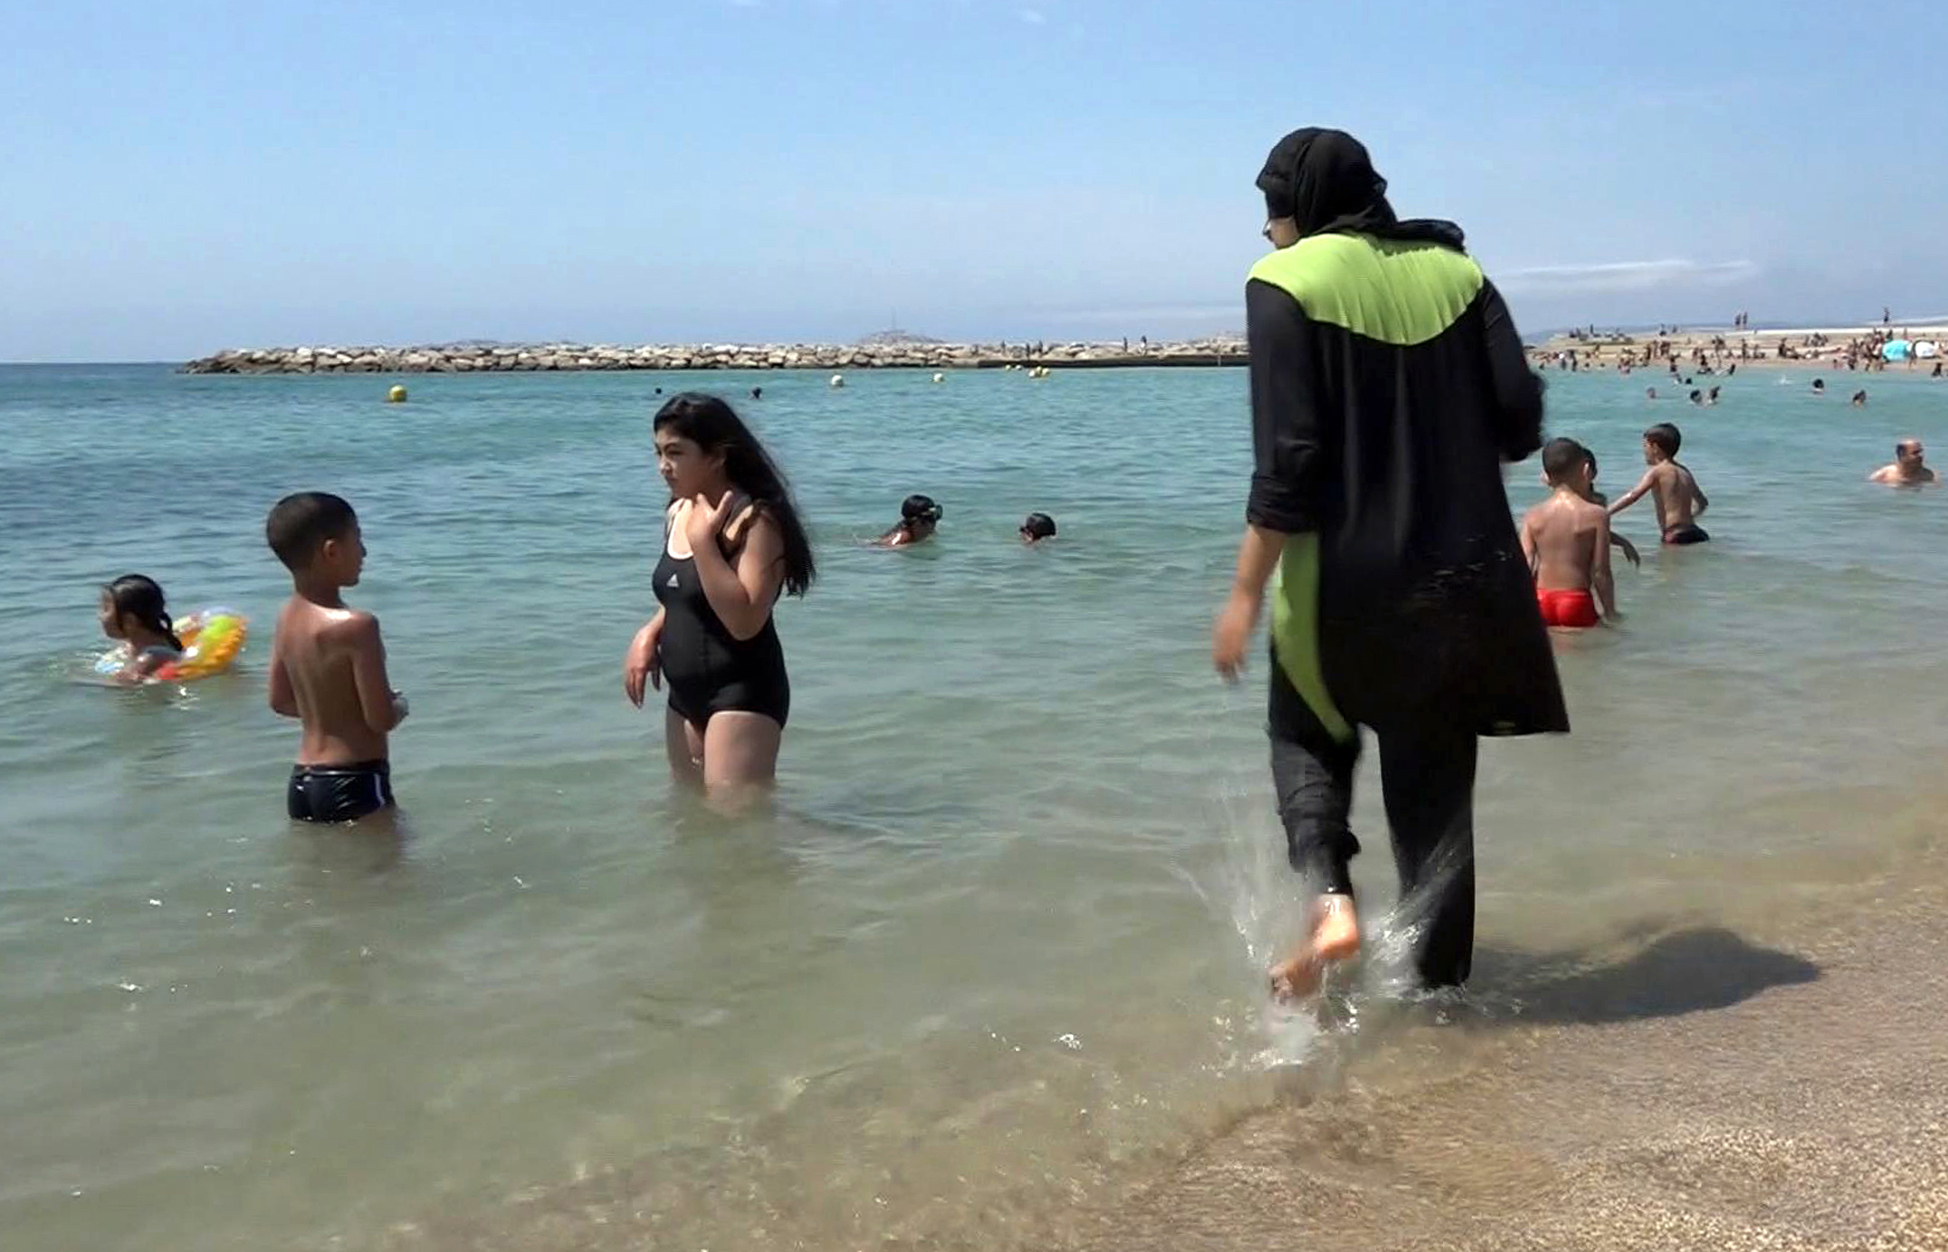 Burkini Ban Muslim Woman Forced to Remove Headscarf at Beach | Time